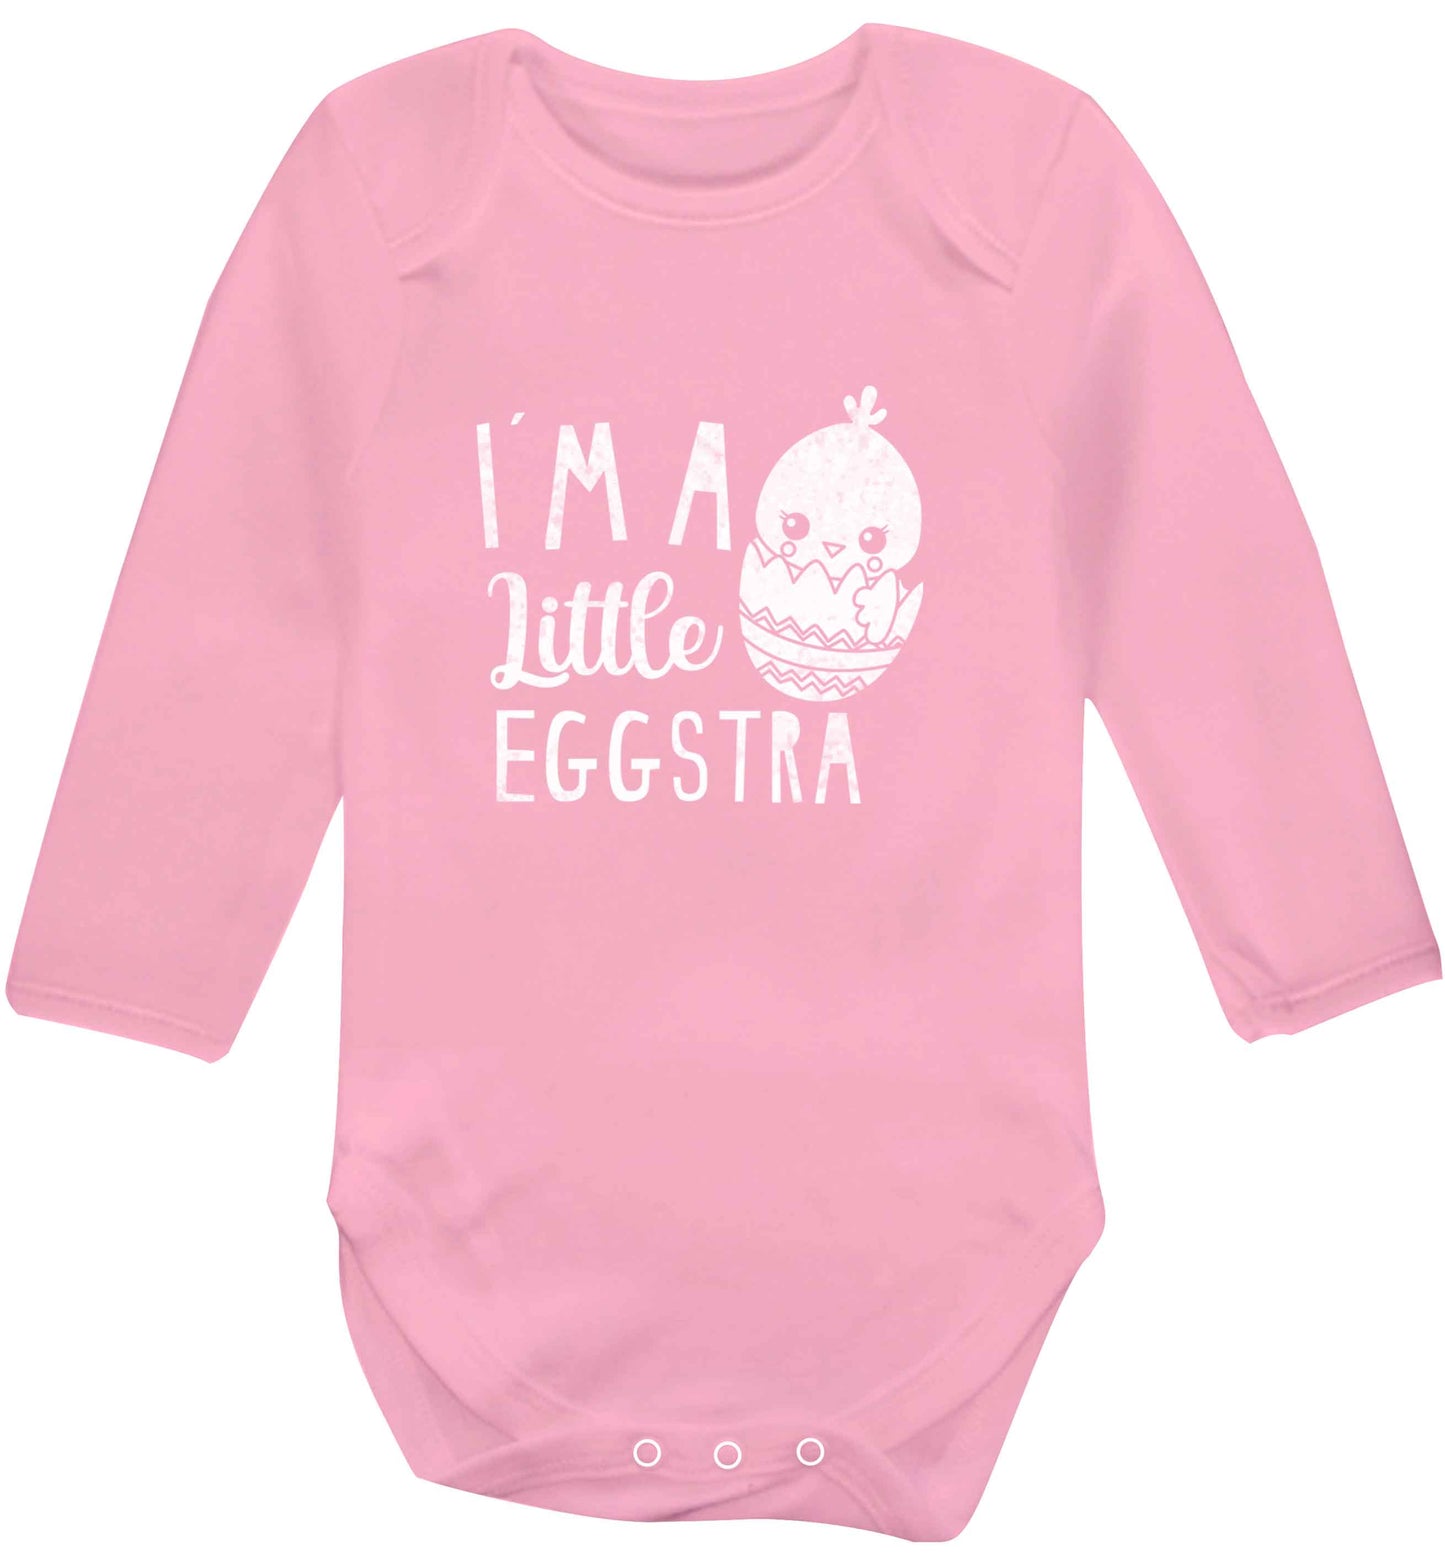 I'm a little eggstra baby vest long sleeved pale pink 6-12 months